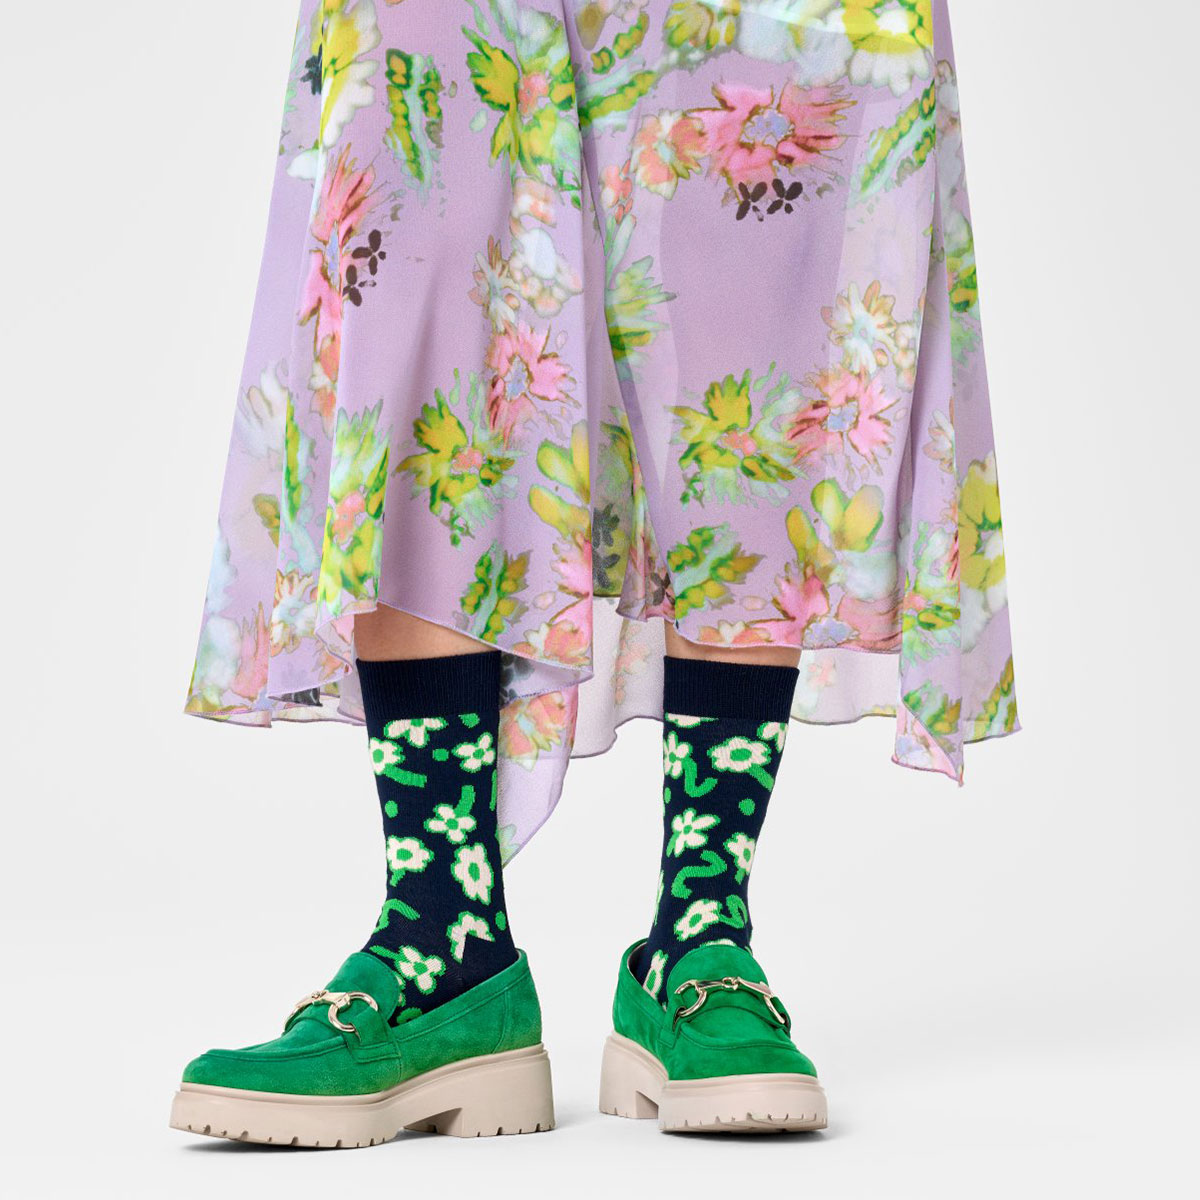 【24SS】Happy Socks ハッピーソックス Dancing Flower ( ダンシング フラワー ) クルー丈 ソックス ユニセックス メンズ ＆ レディース 10240042